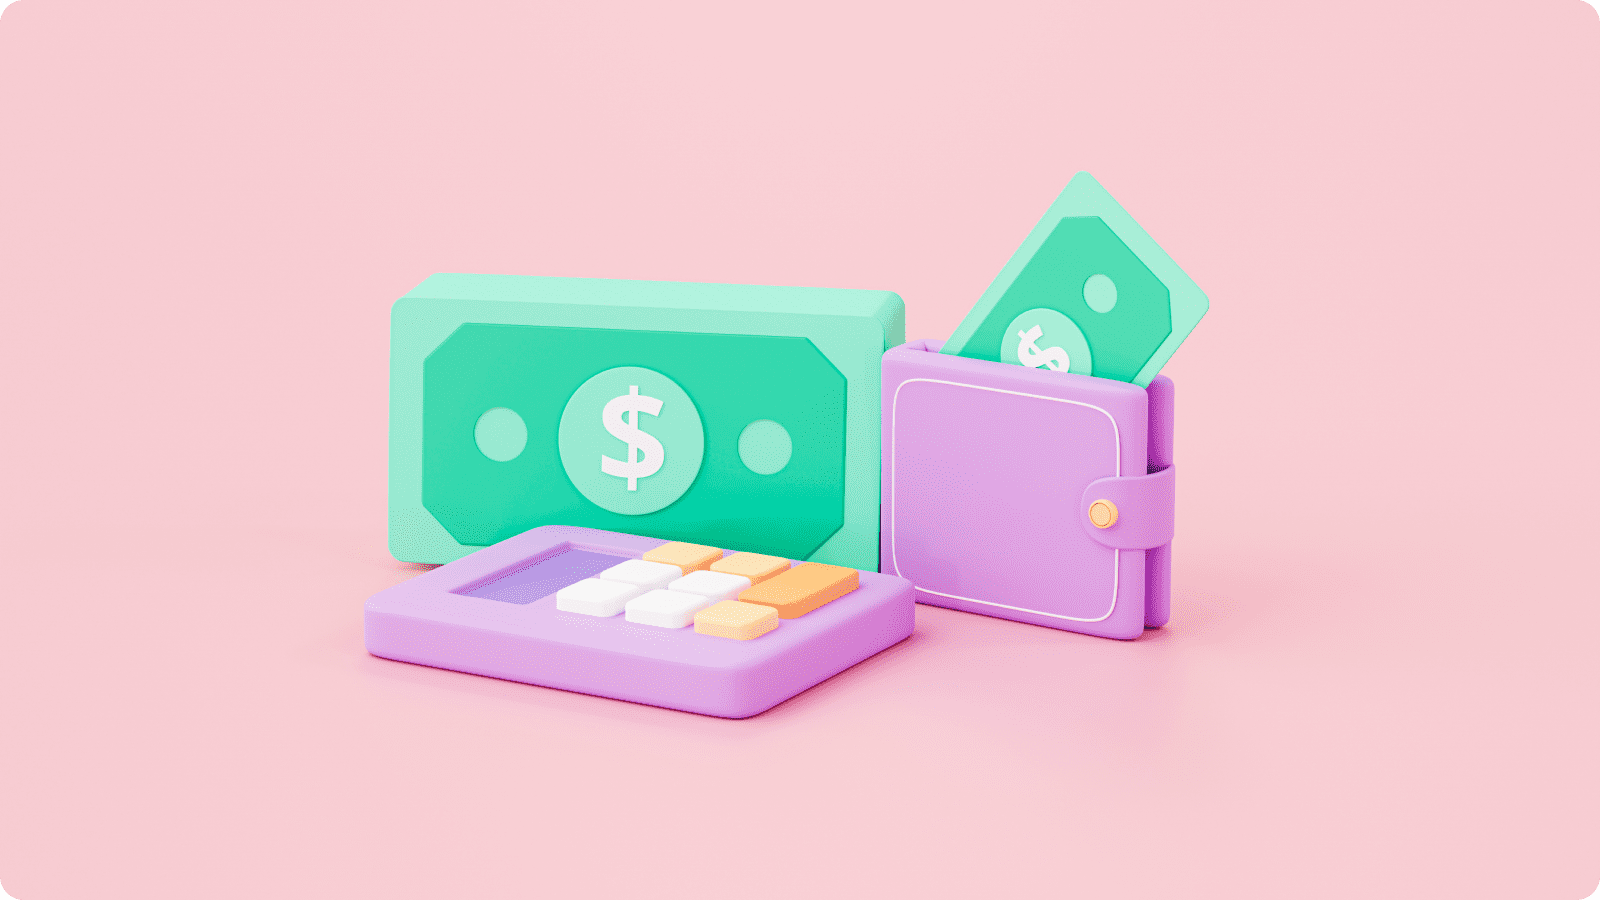 money wallet and calculator illustration